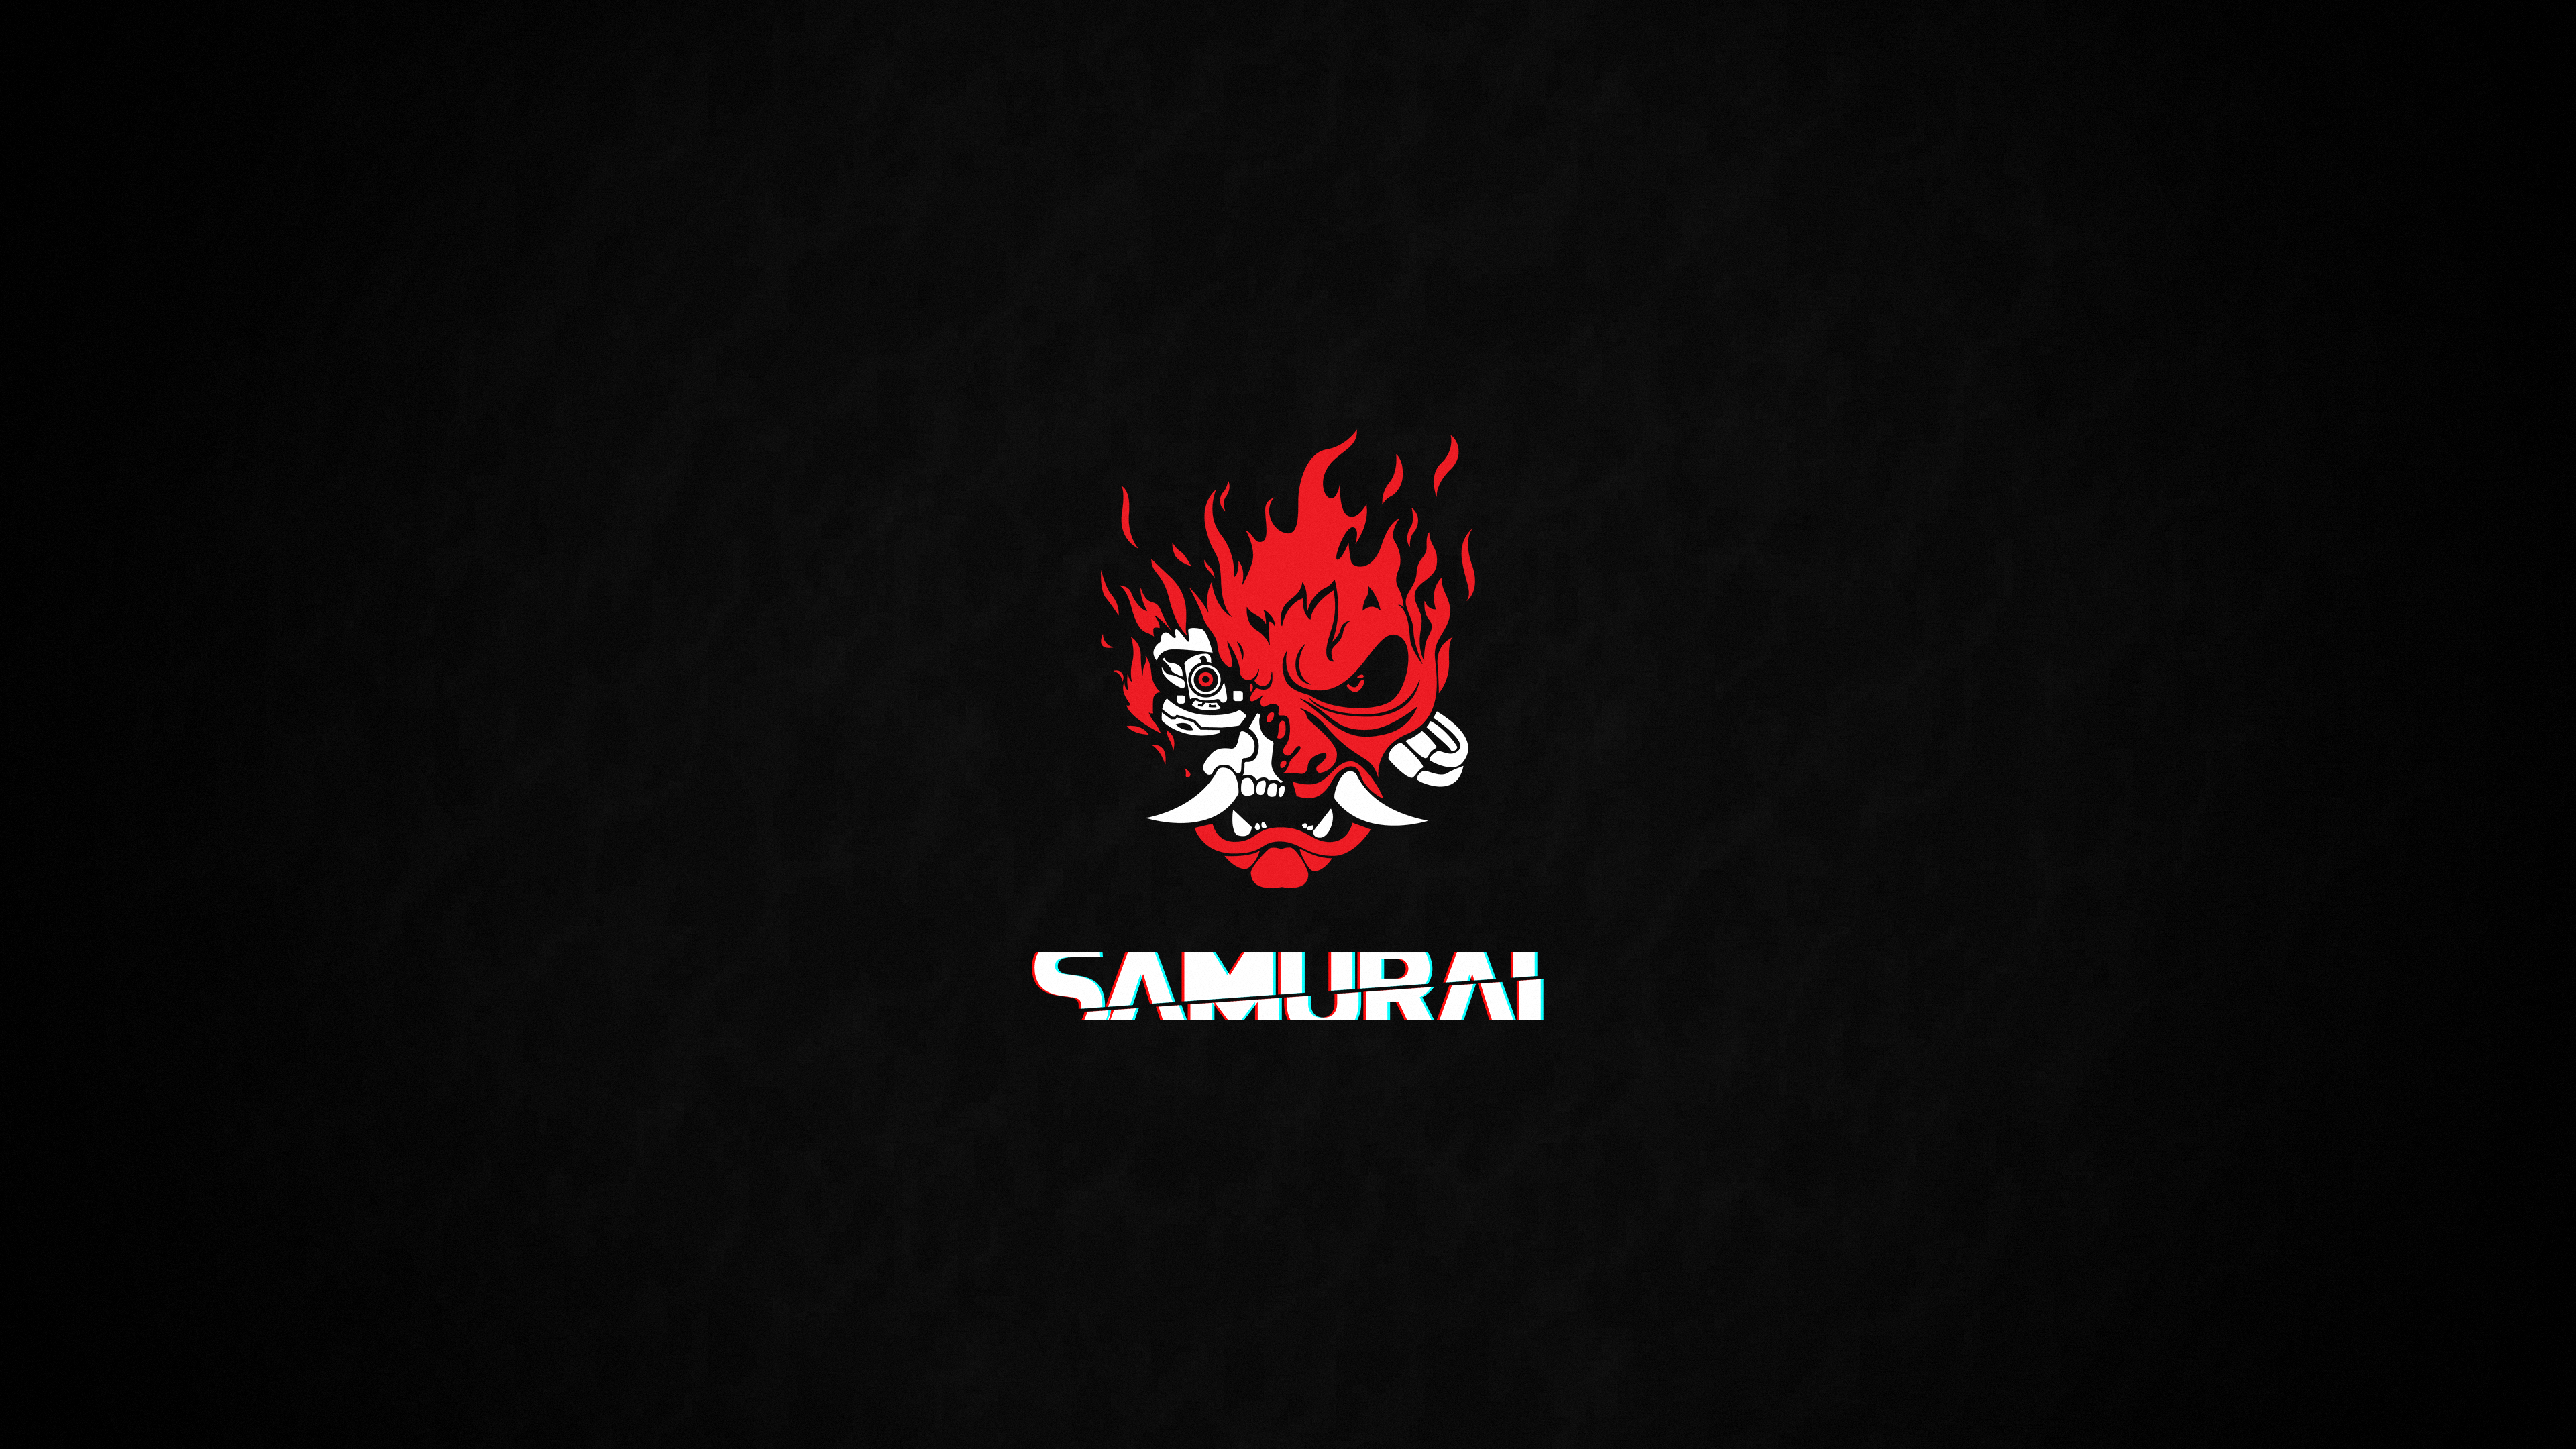 General 3840x2160 Cyberpunk 2077 Samurai (Cyberpunk 2077) CD Projekt RED minimalism simple background black background